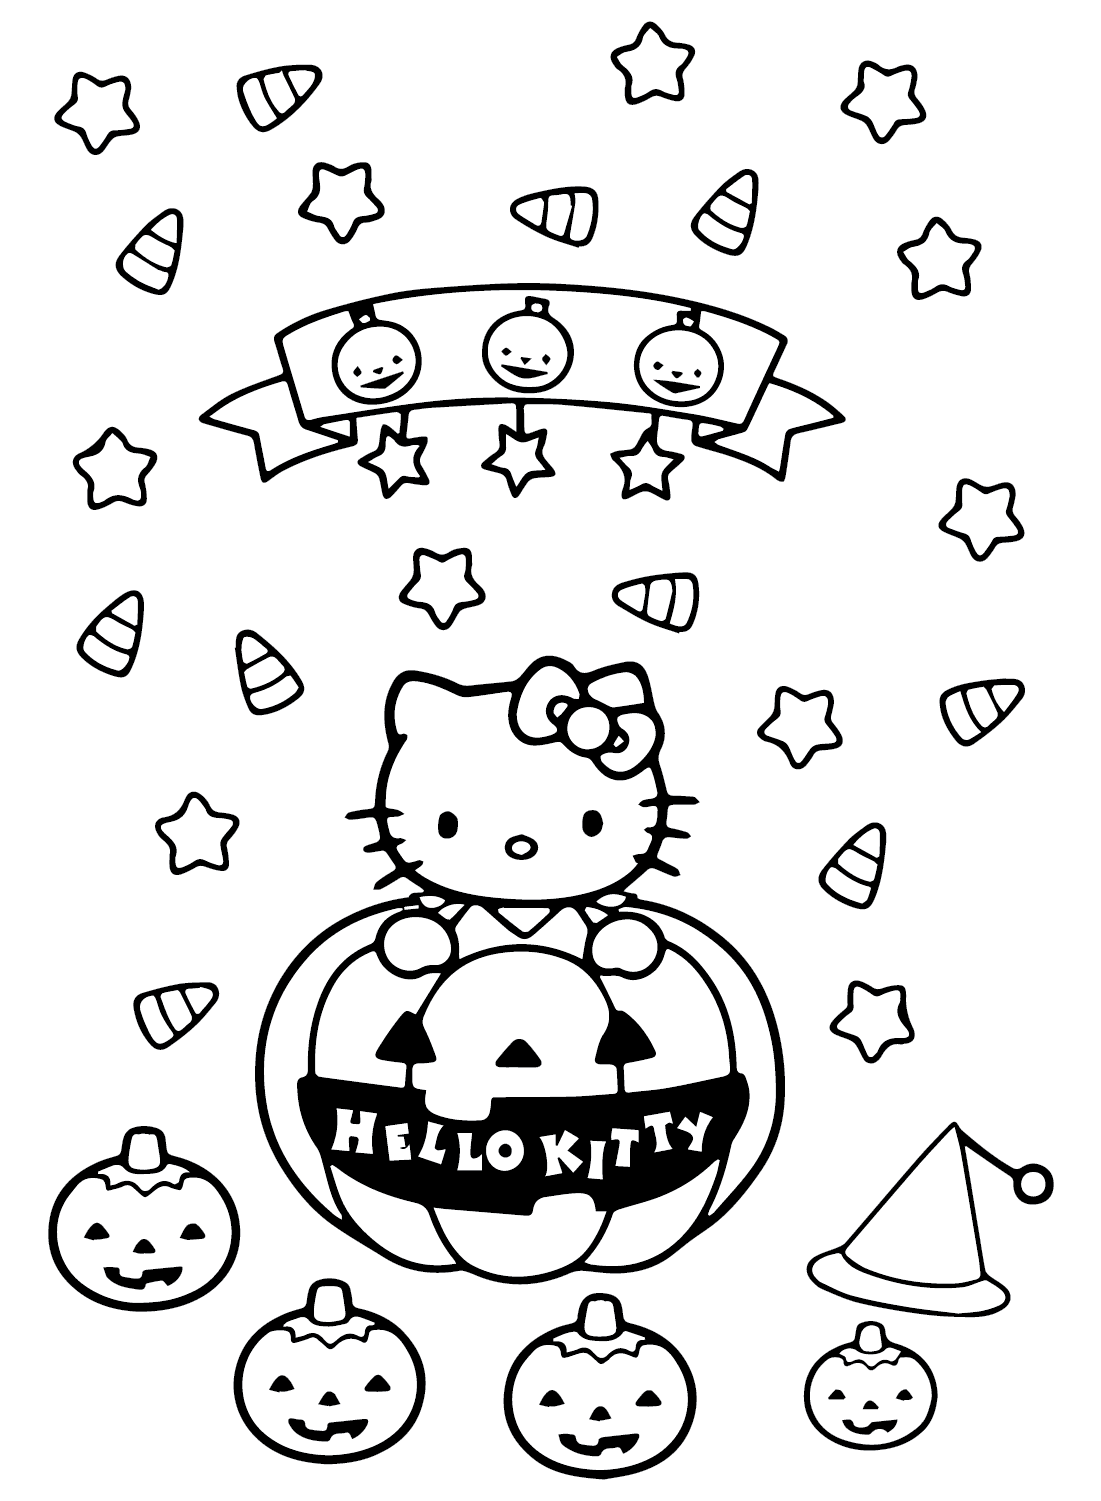 Gratis kleurplaten voor Halloween Hello Kitty printbaar vanuit Halloween Hello Kitty